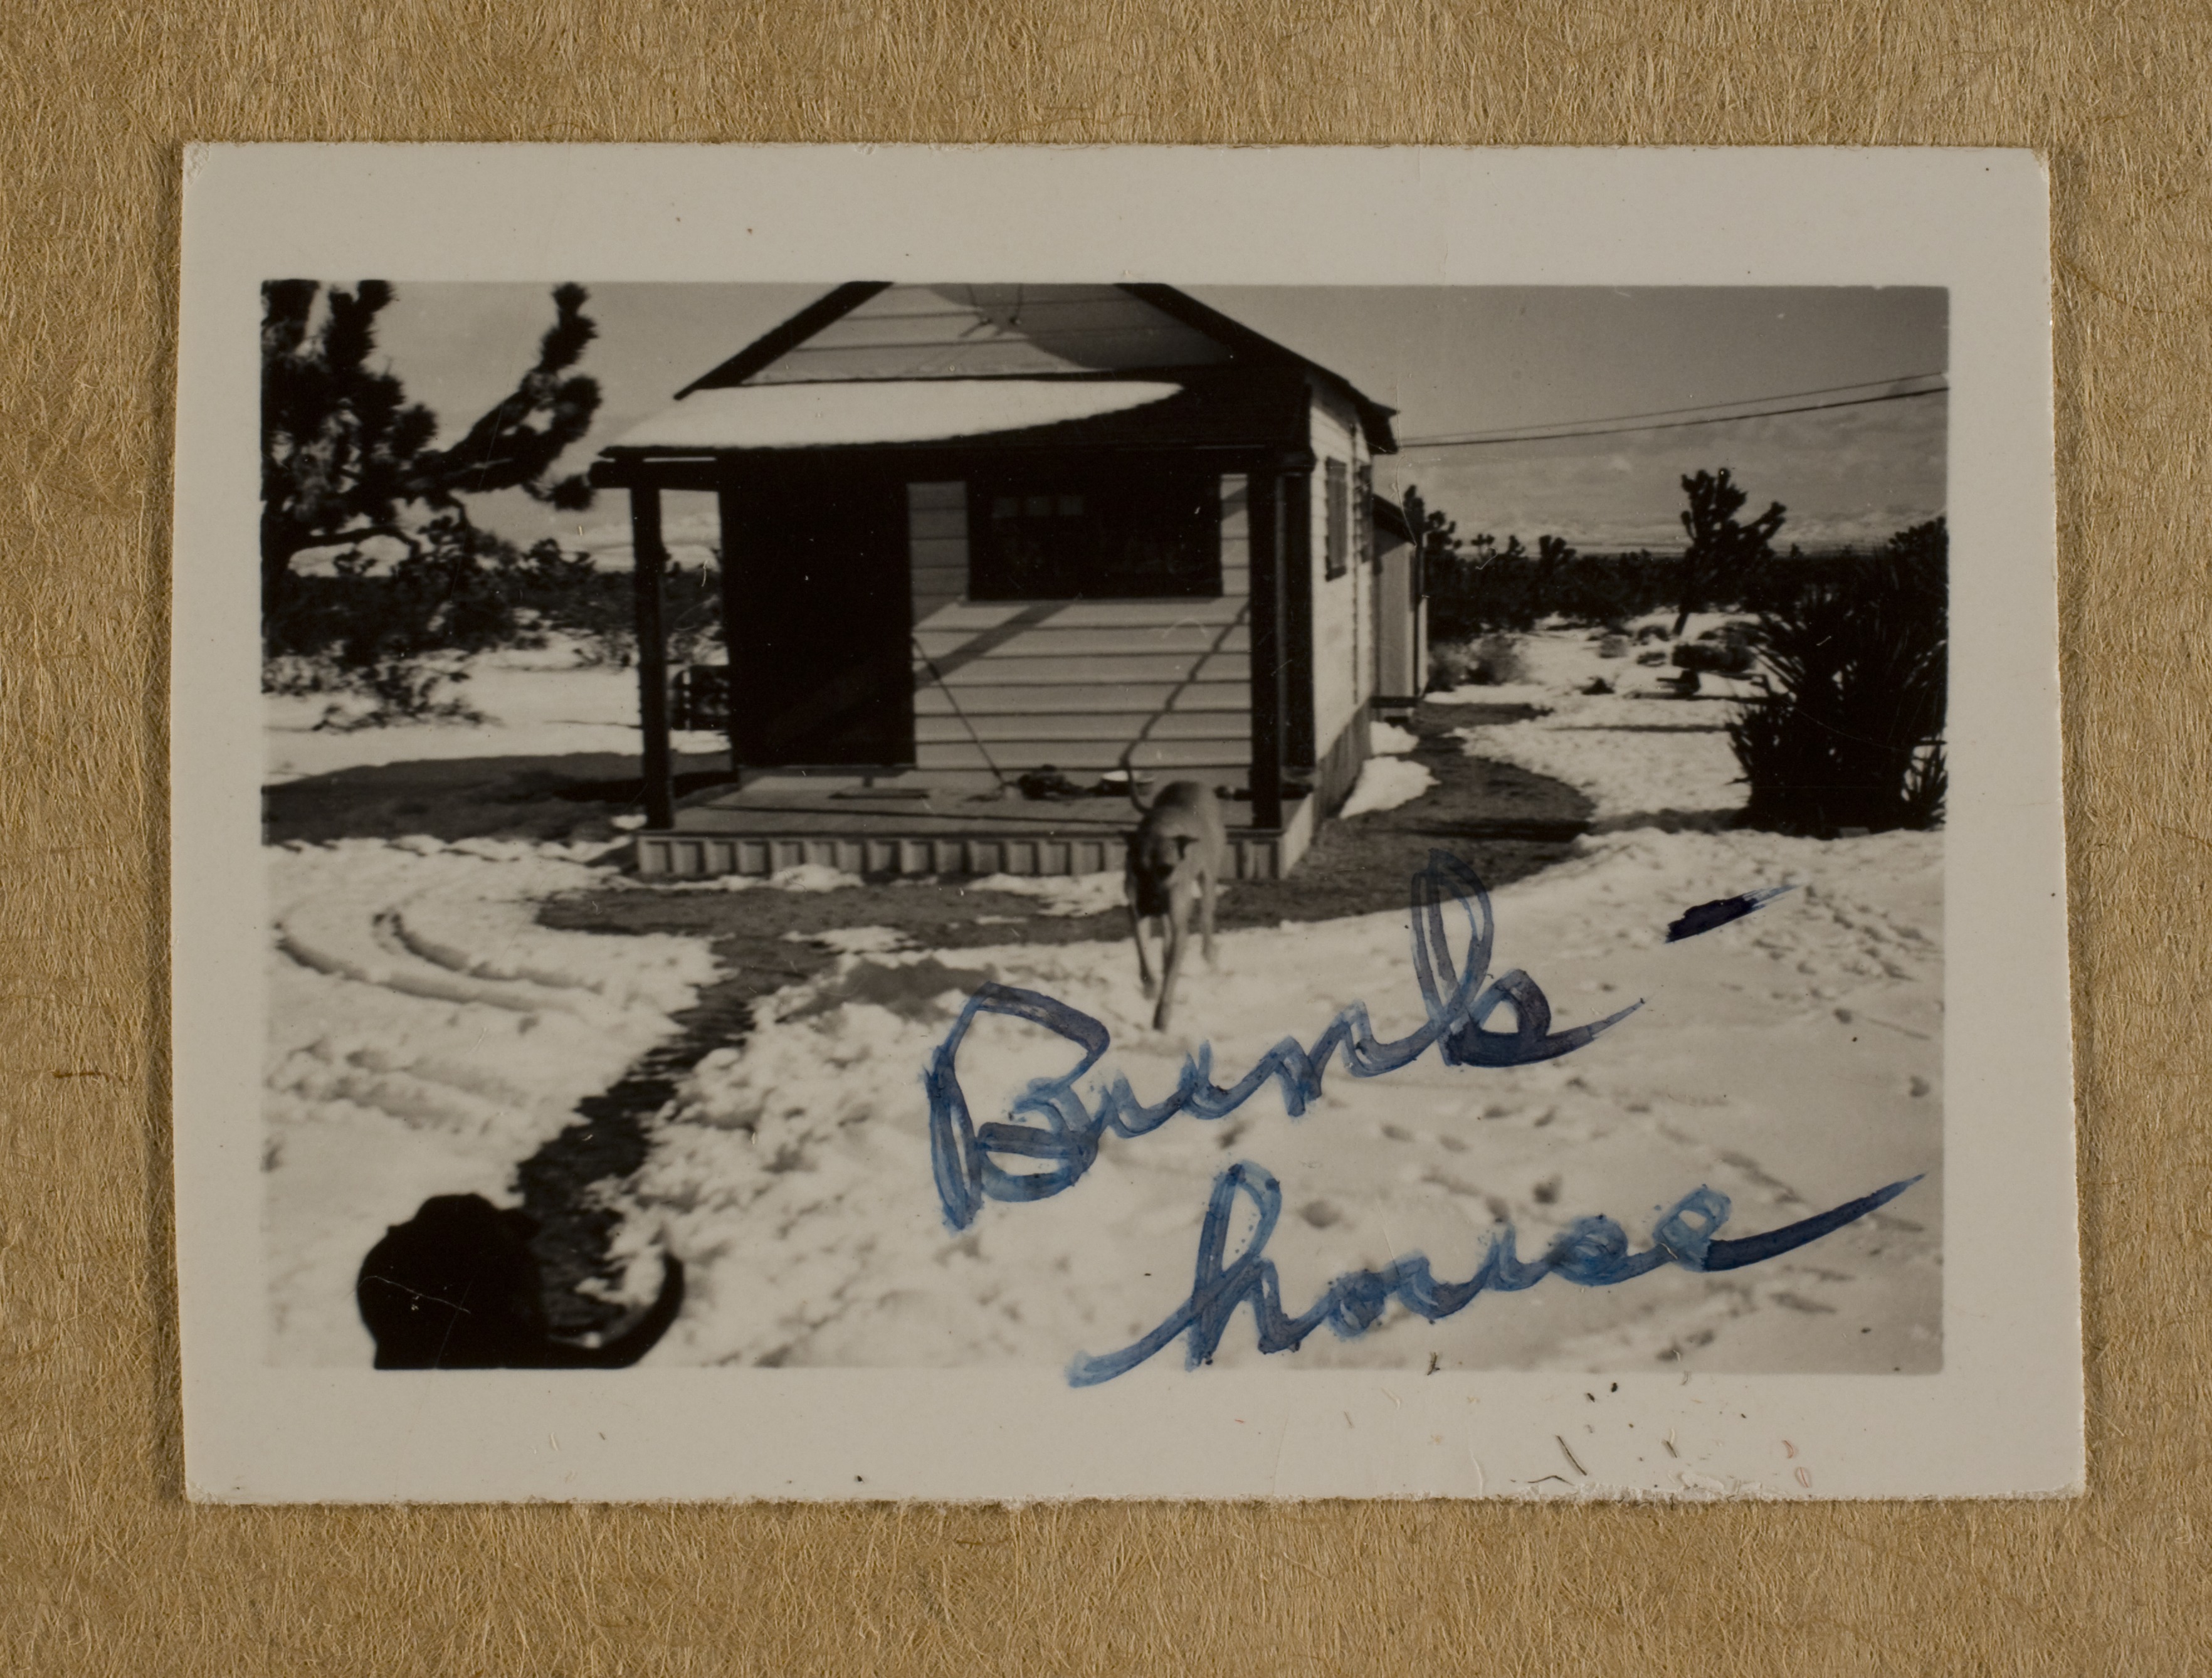 Guest house at Walking Box Ranch, Nevada: photographic print